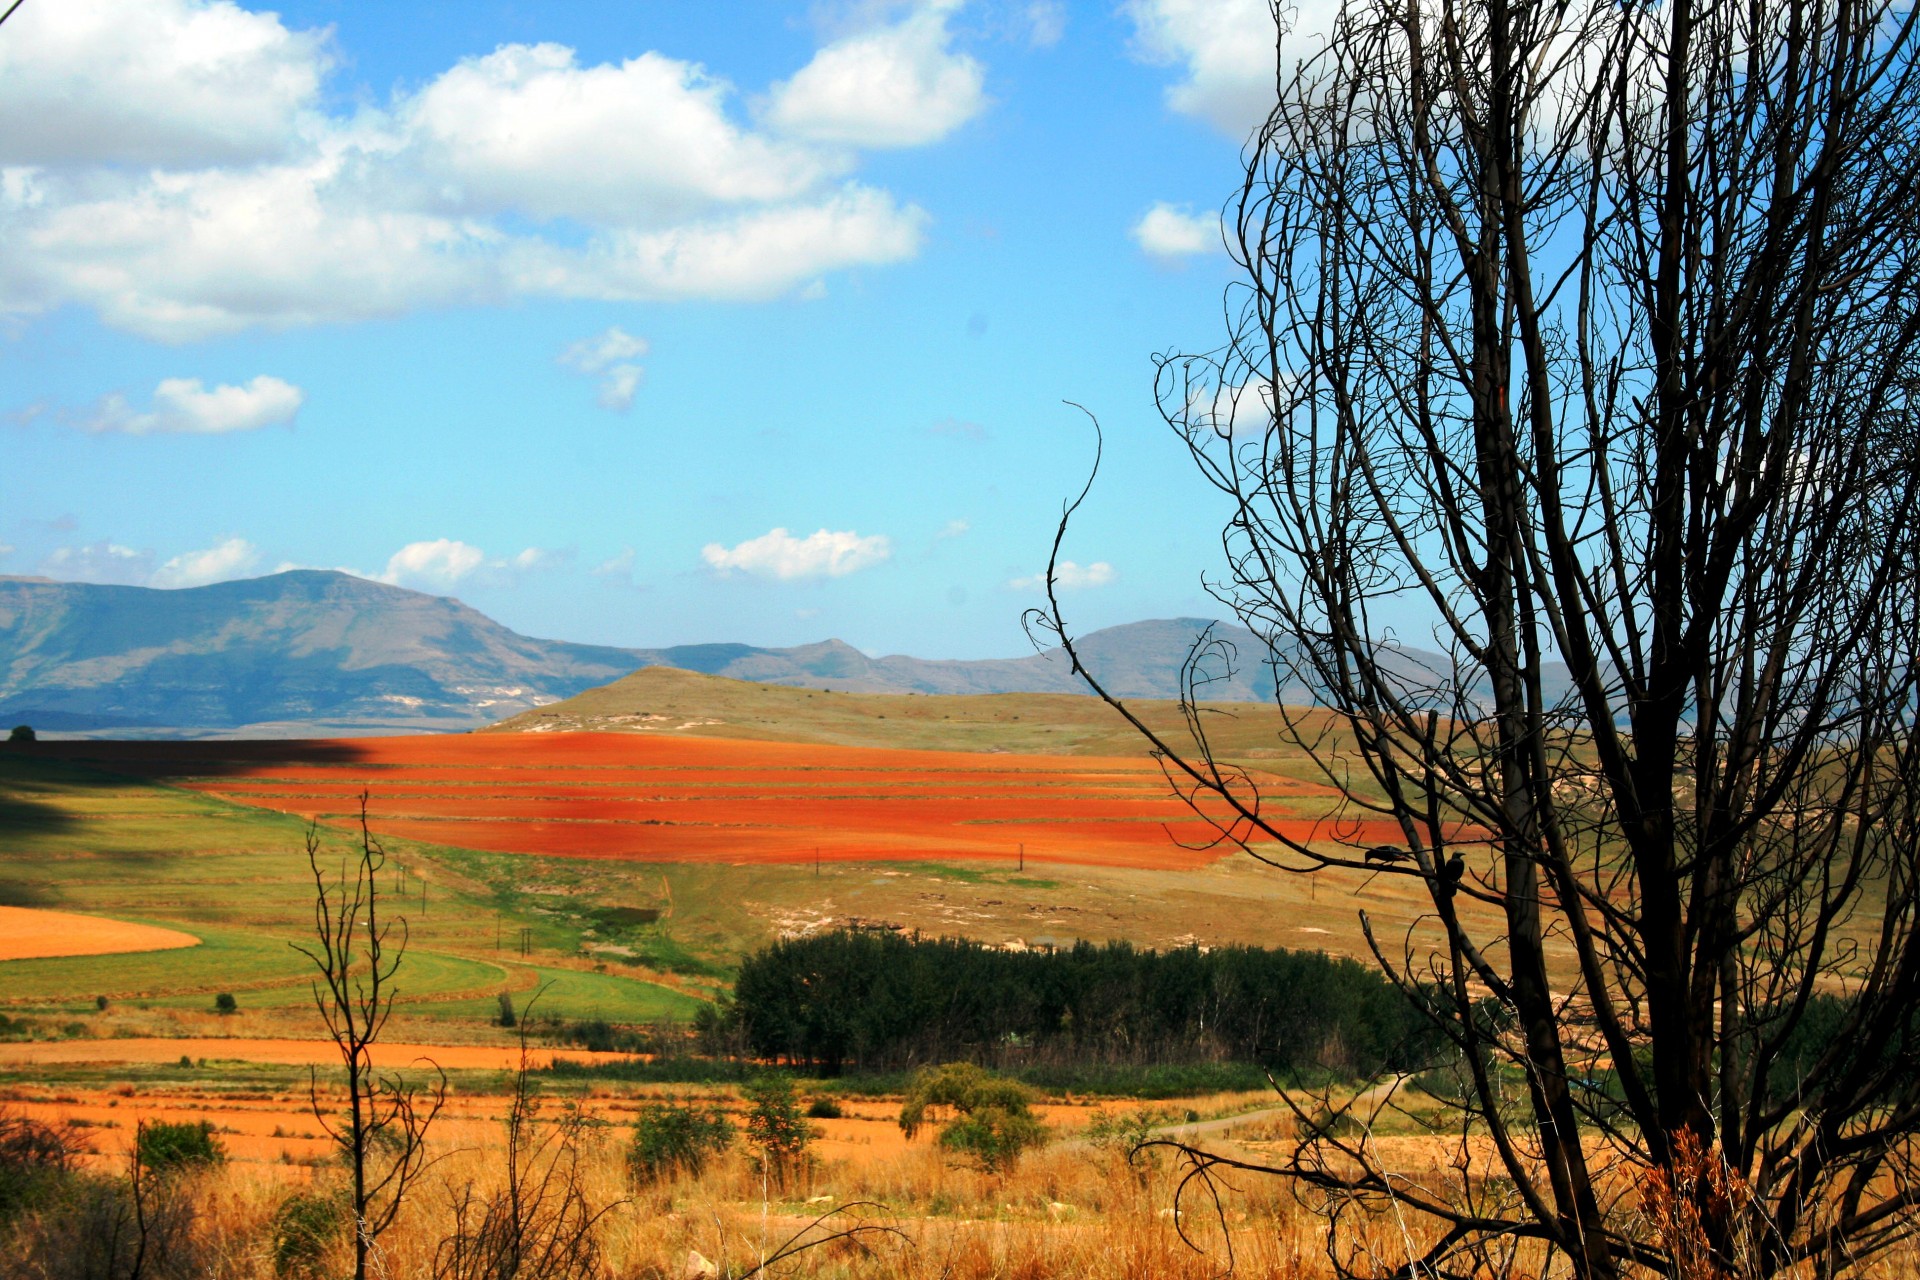 veld landscape eastern free state free photo